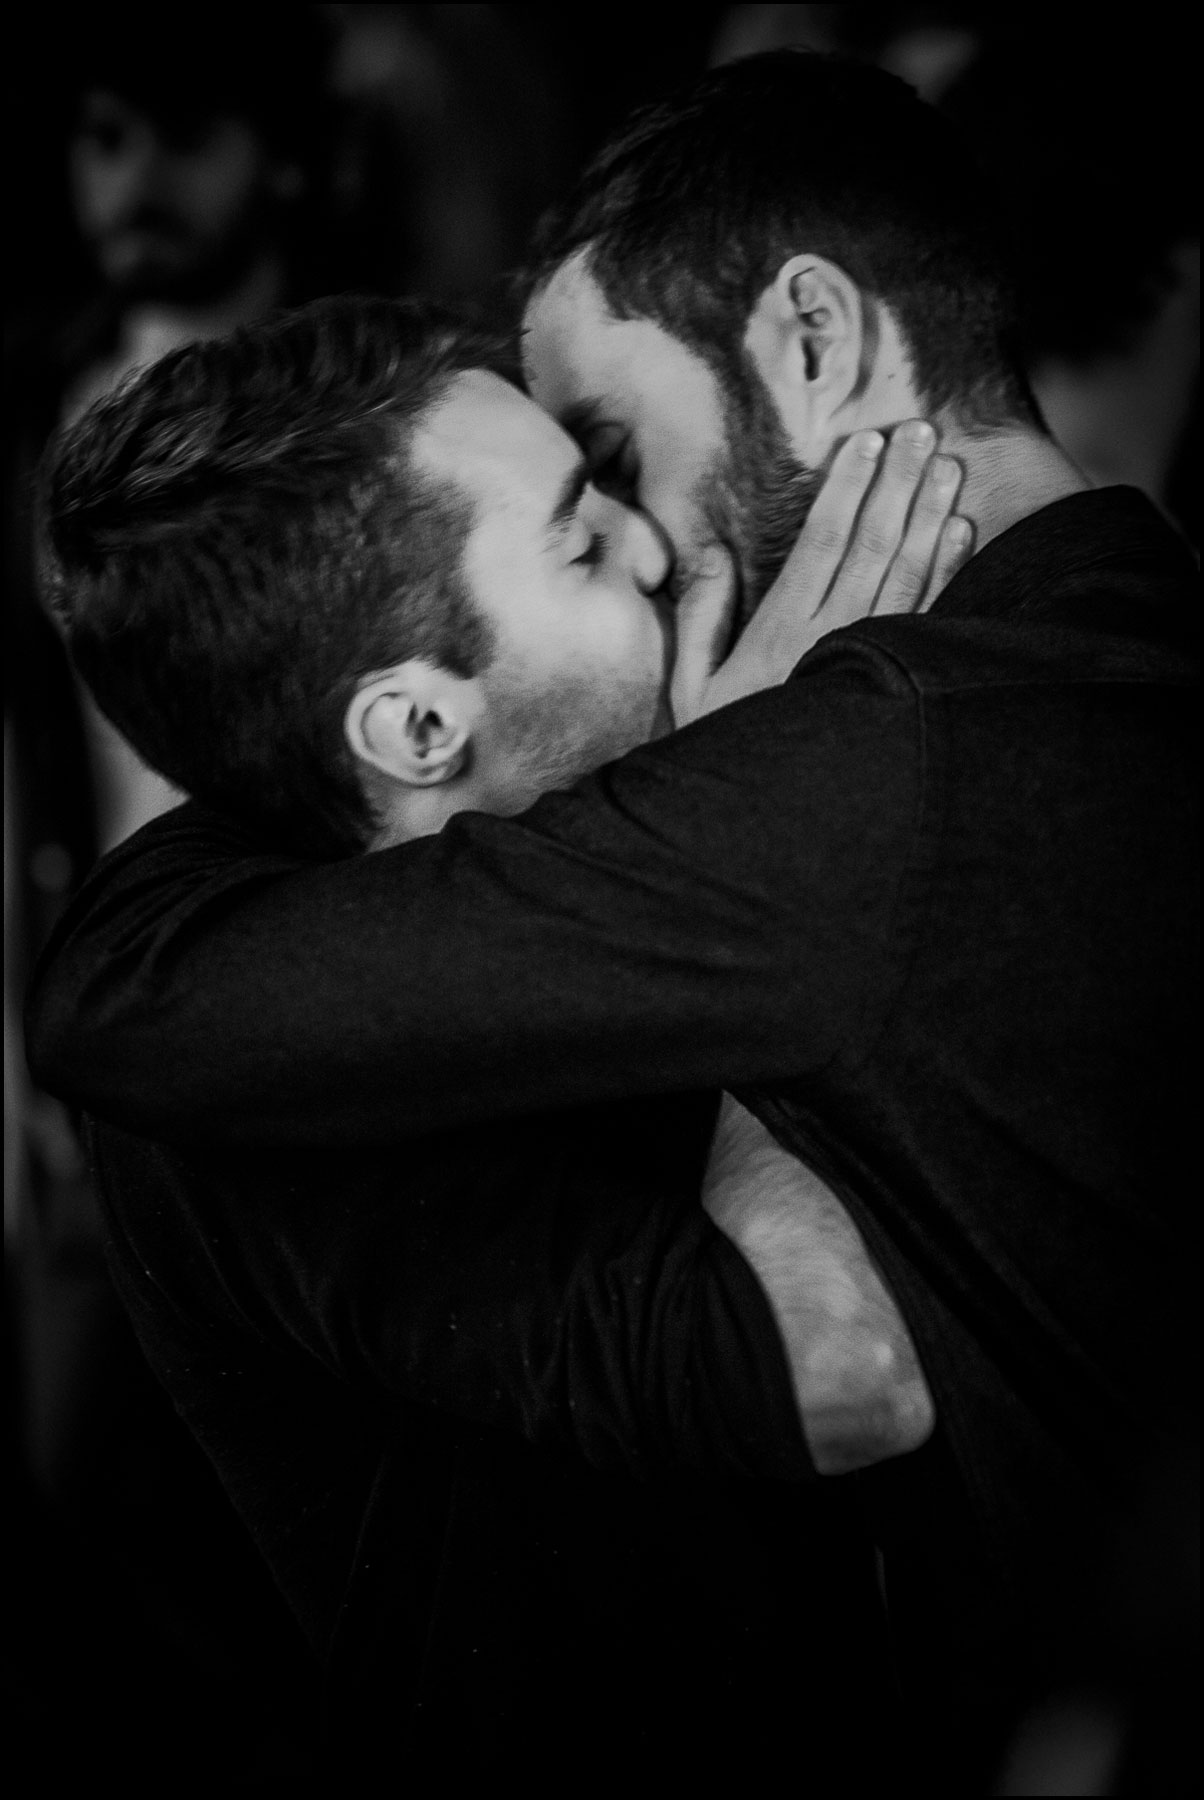 2-hommes-bruns-s-embrassent-tendresse-noir-et-blanc